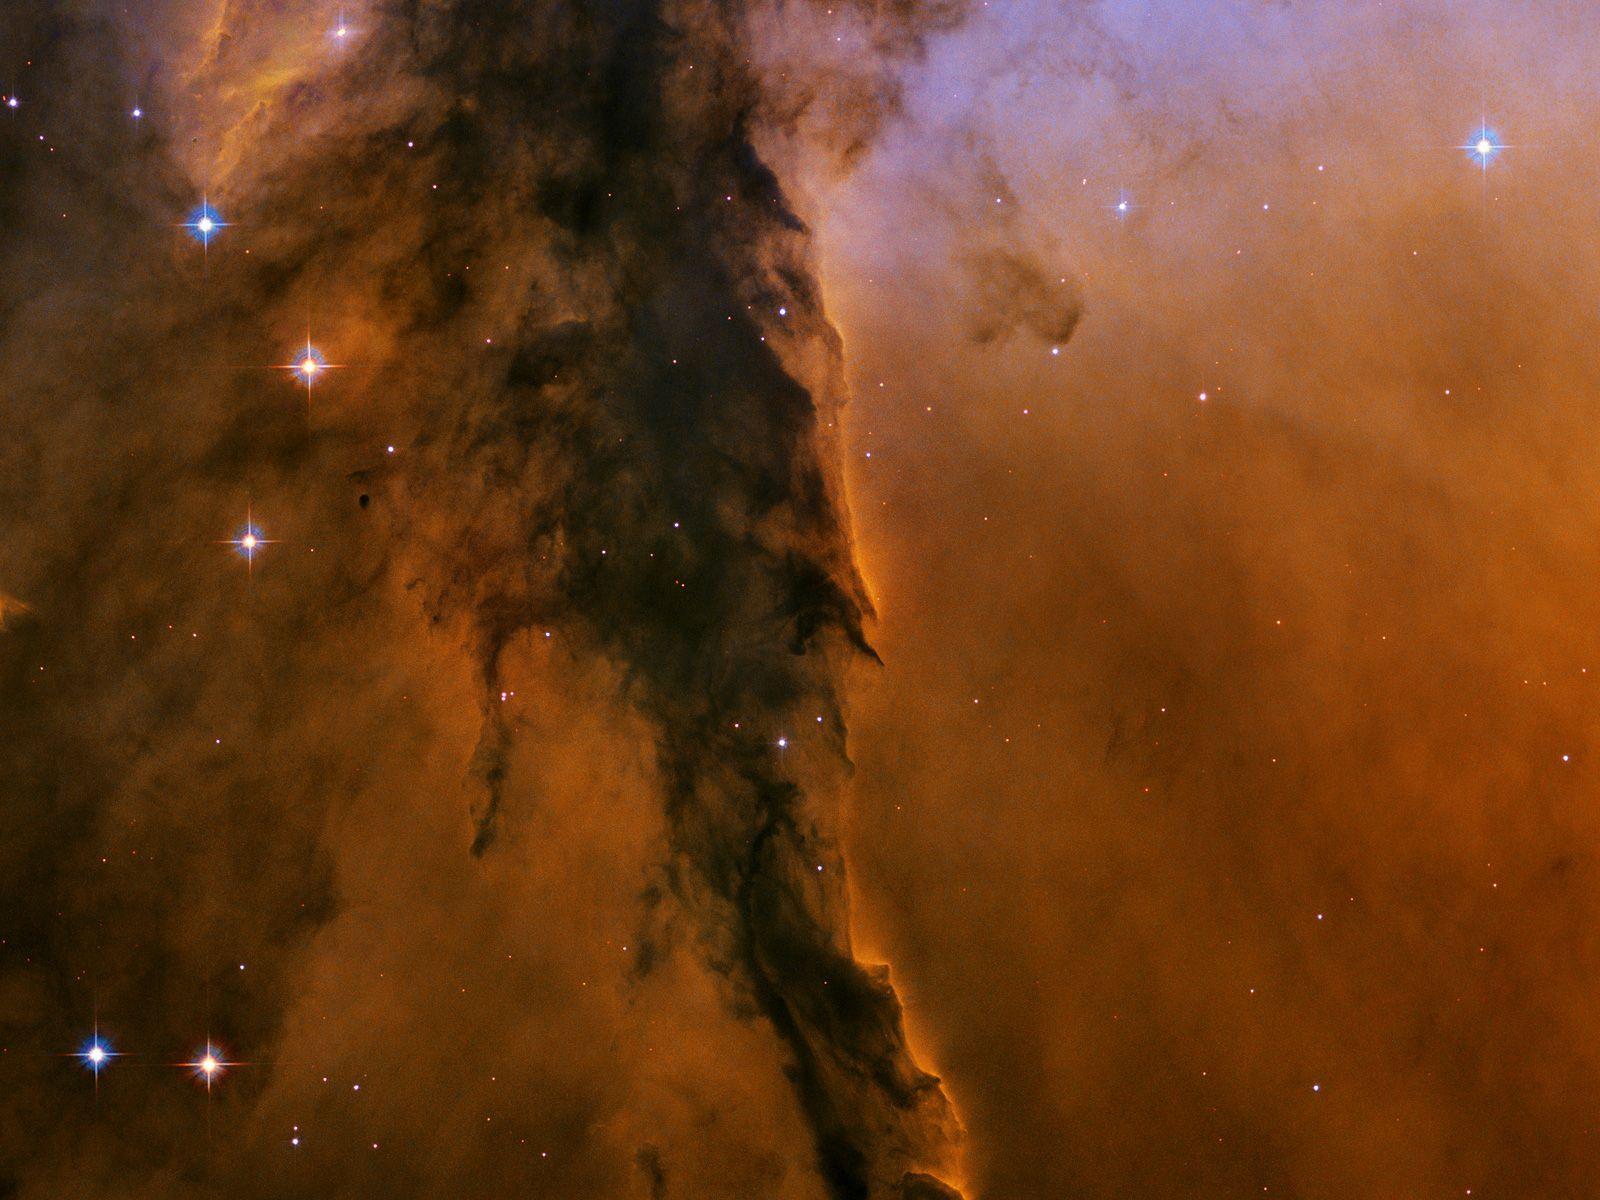 Stellar Spire In The Eagle Nebula. Free Desktop Wallpaper